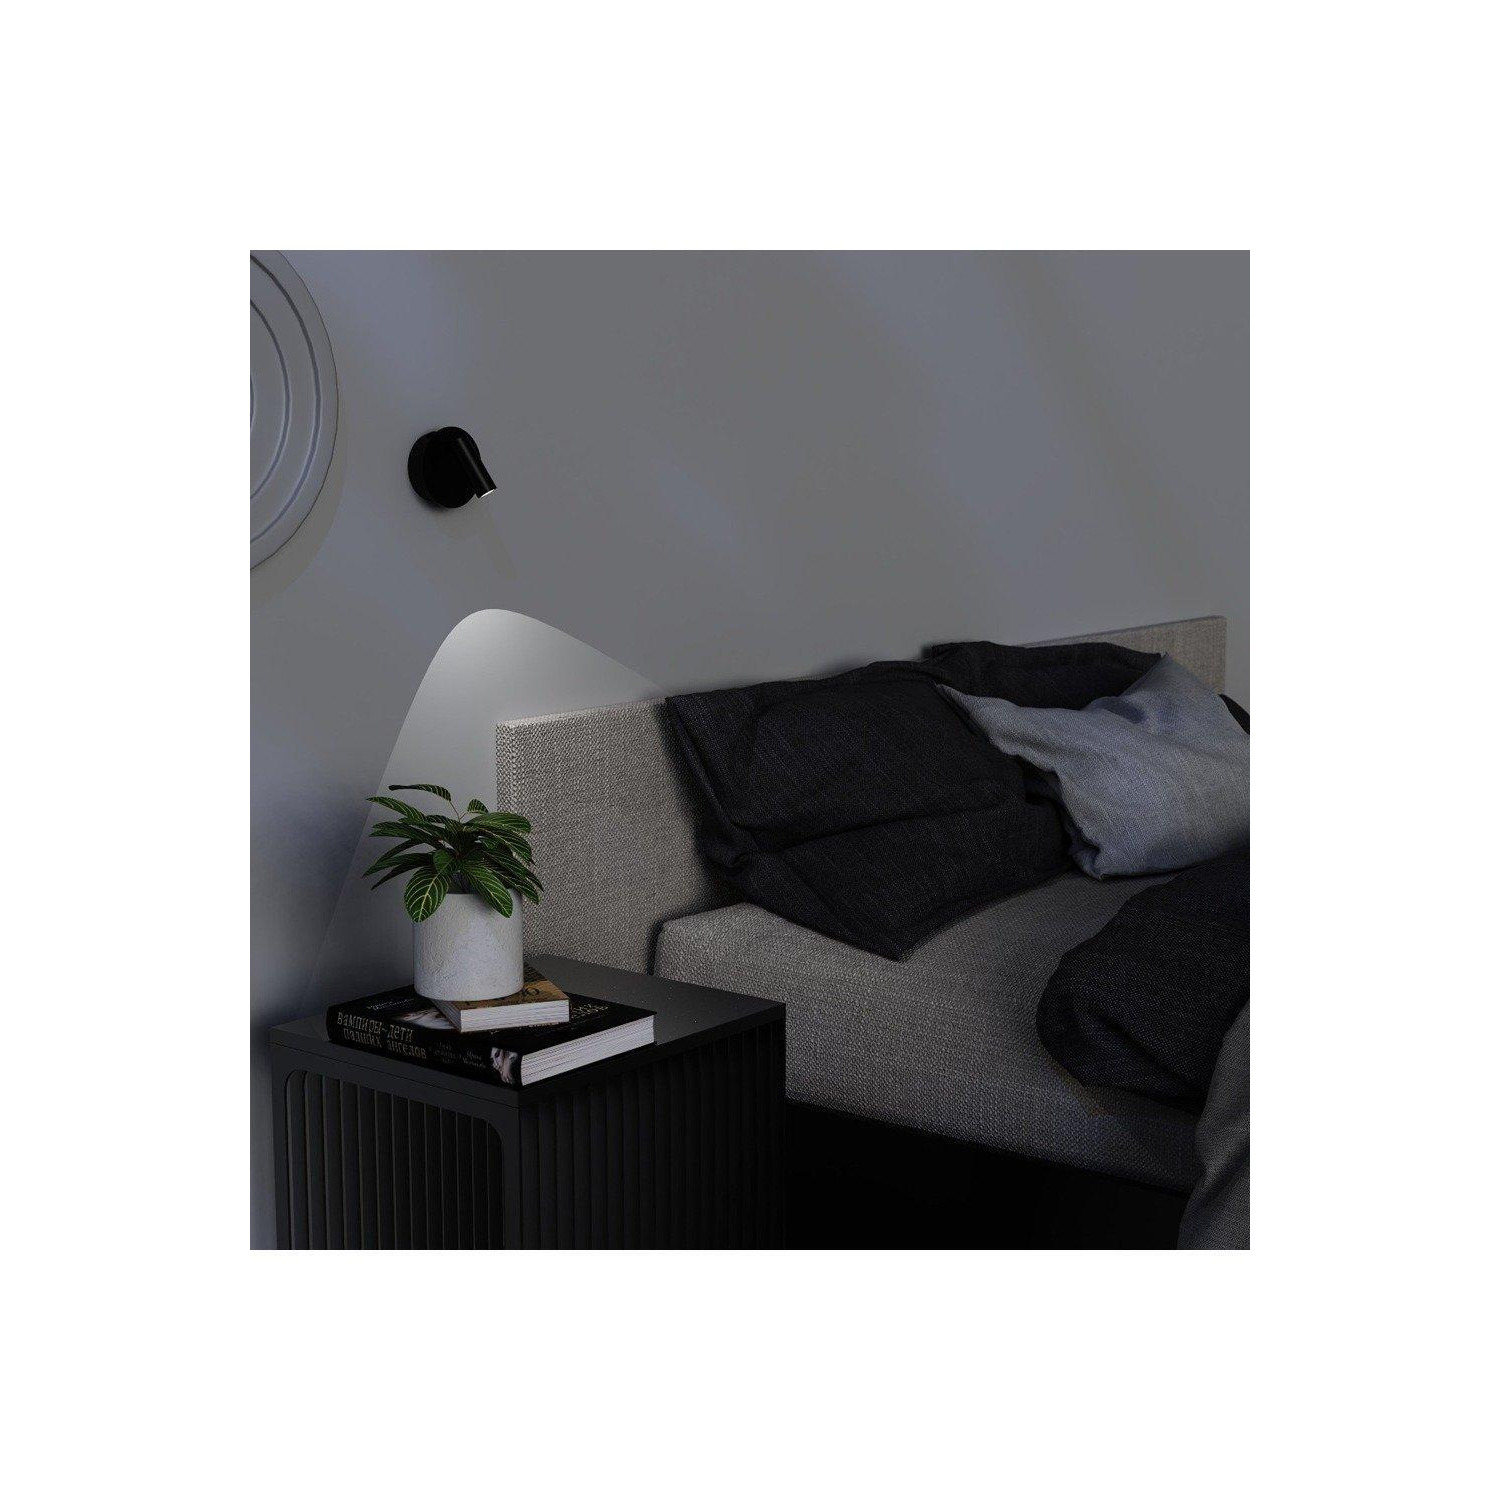 CGC Lighting 'Scarlet' Black Adjustable Head LED Rechargeable Magnetic USB Reading Bedside Wall Light - image 1